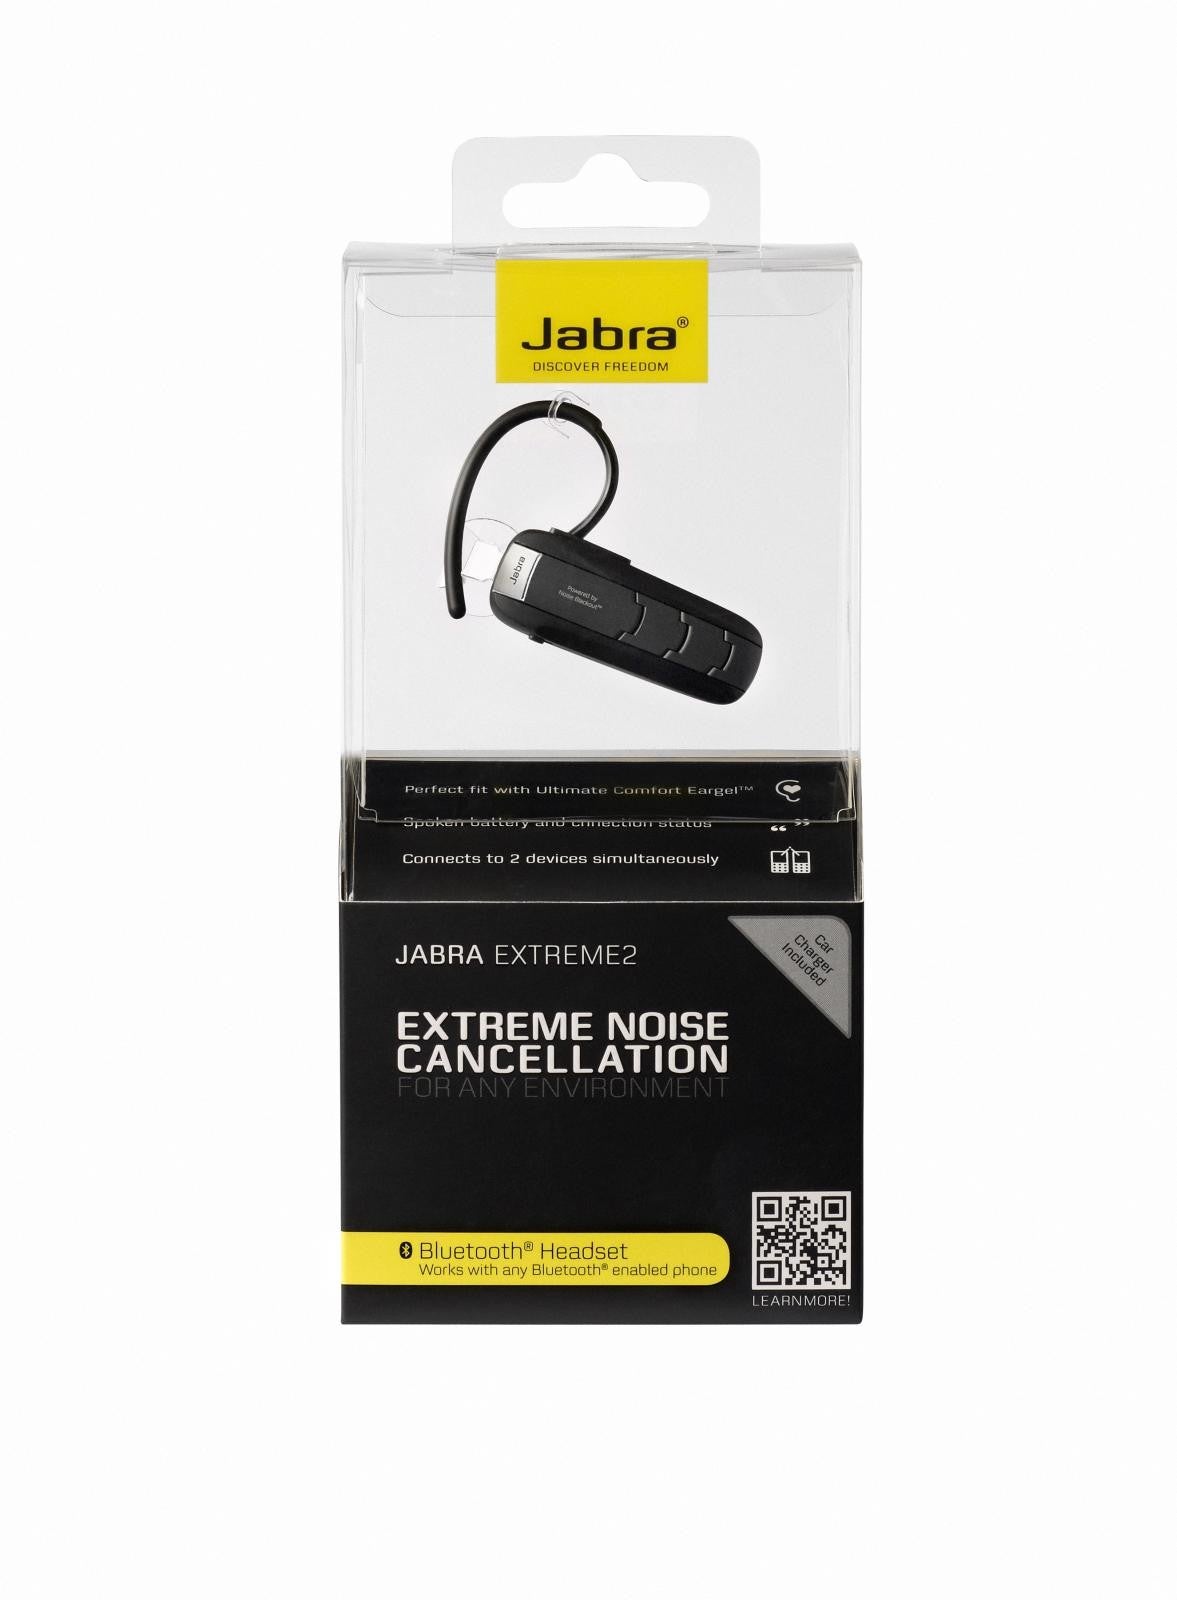 Jabra EXTREME2 - Jabra SUPREME and EXTREME2 Bluetooth headsets feature Noise Blackout 3.0 technology